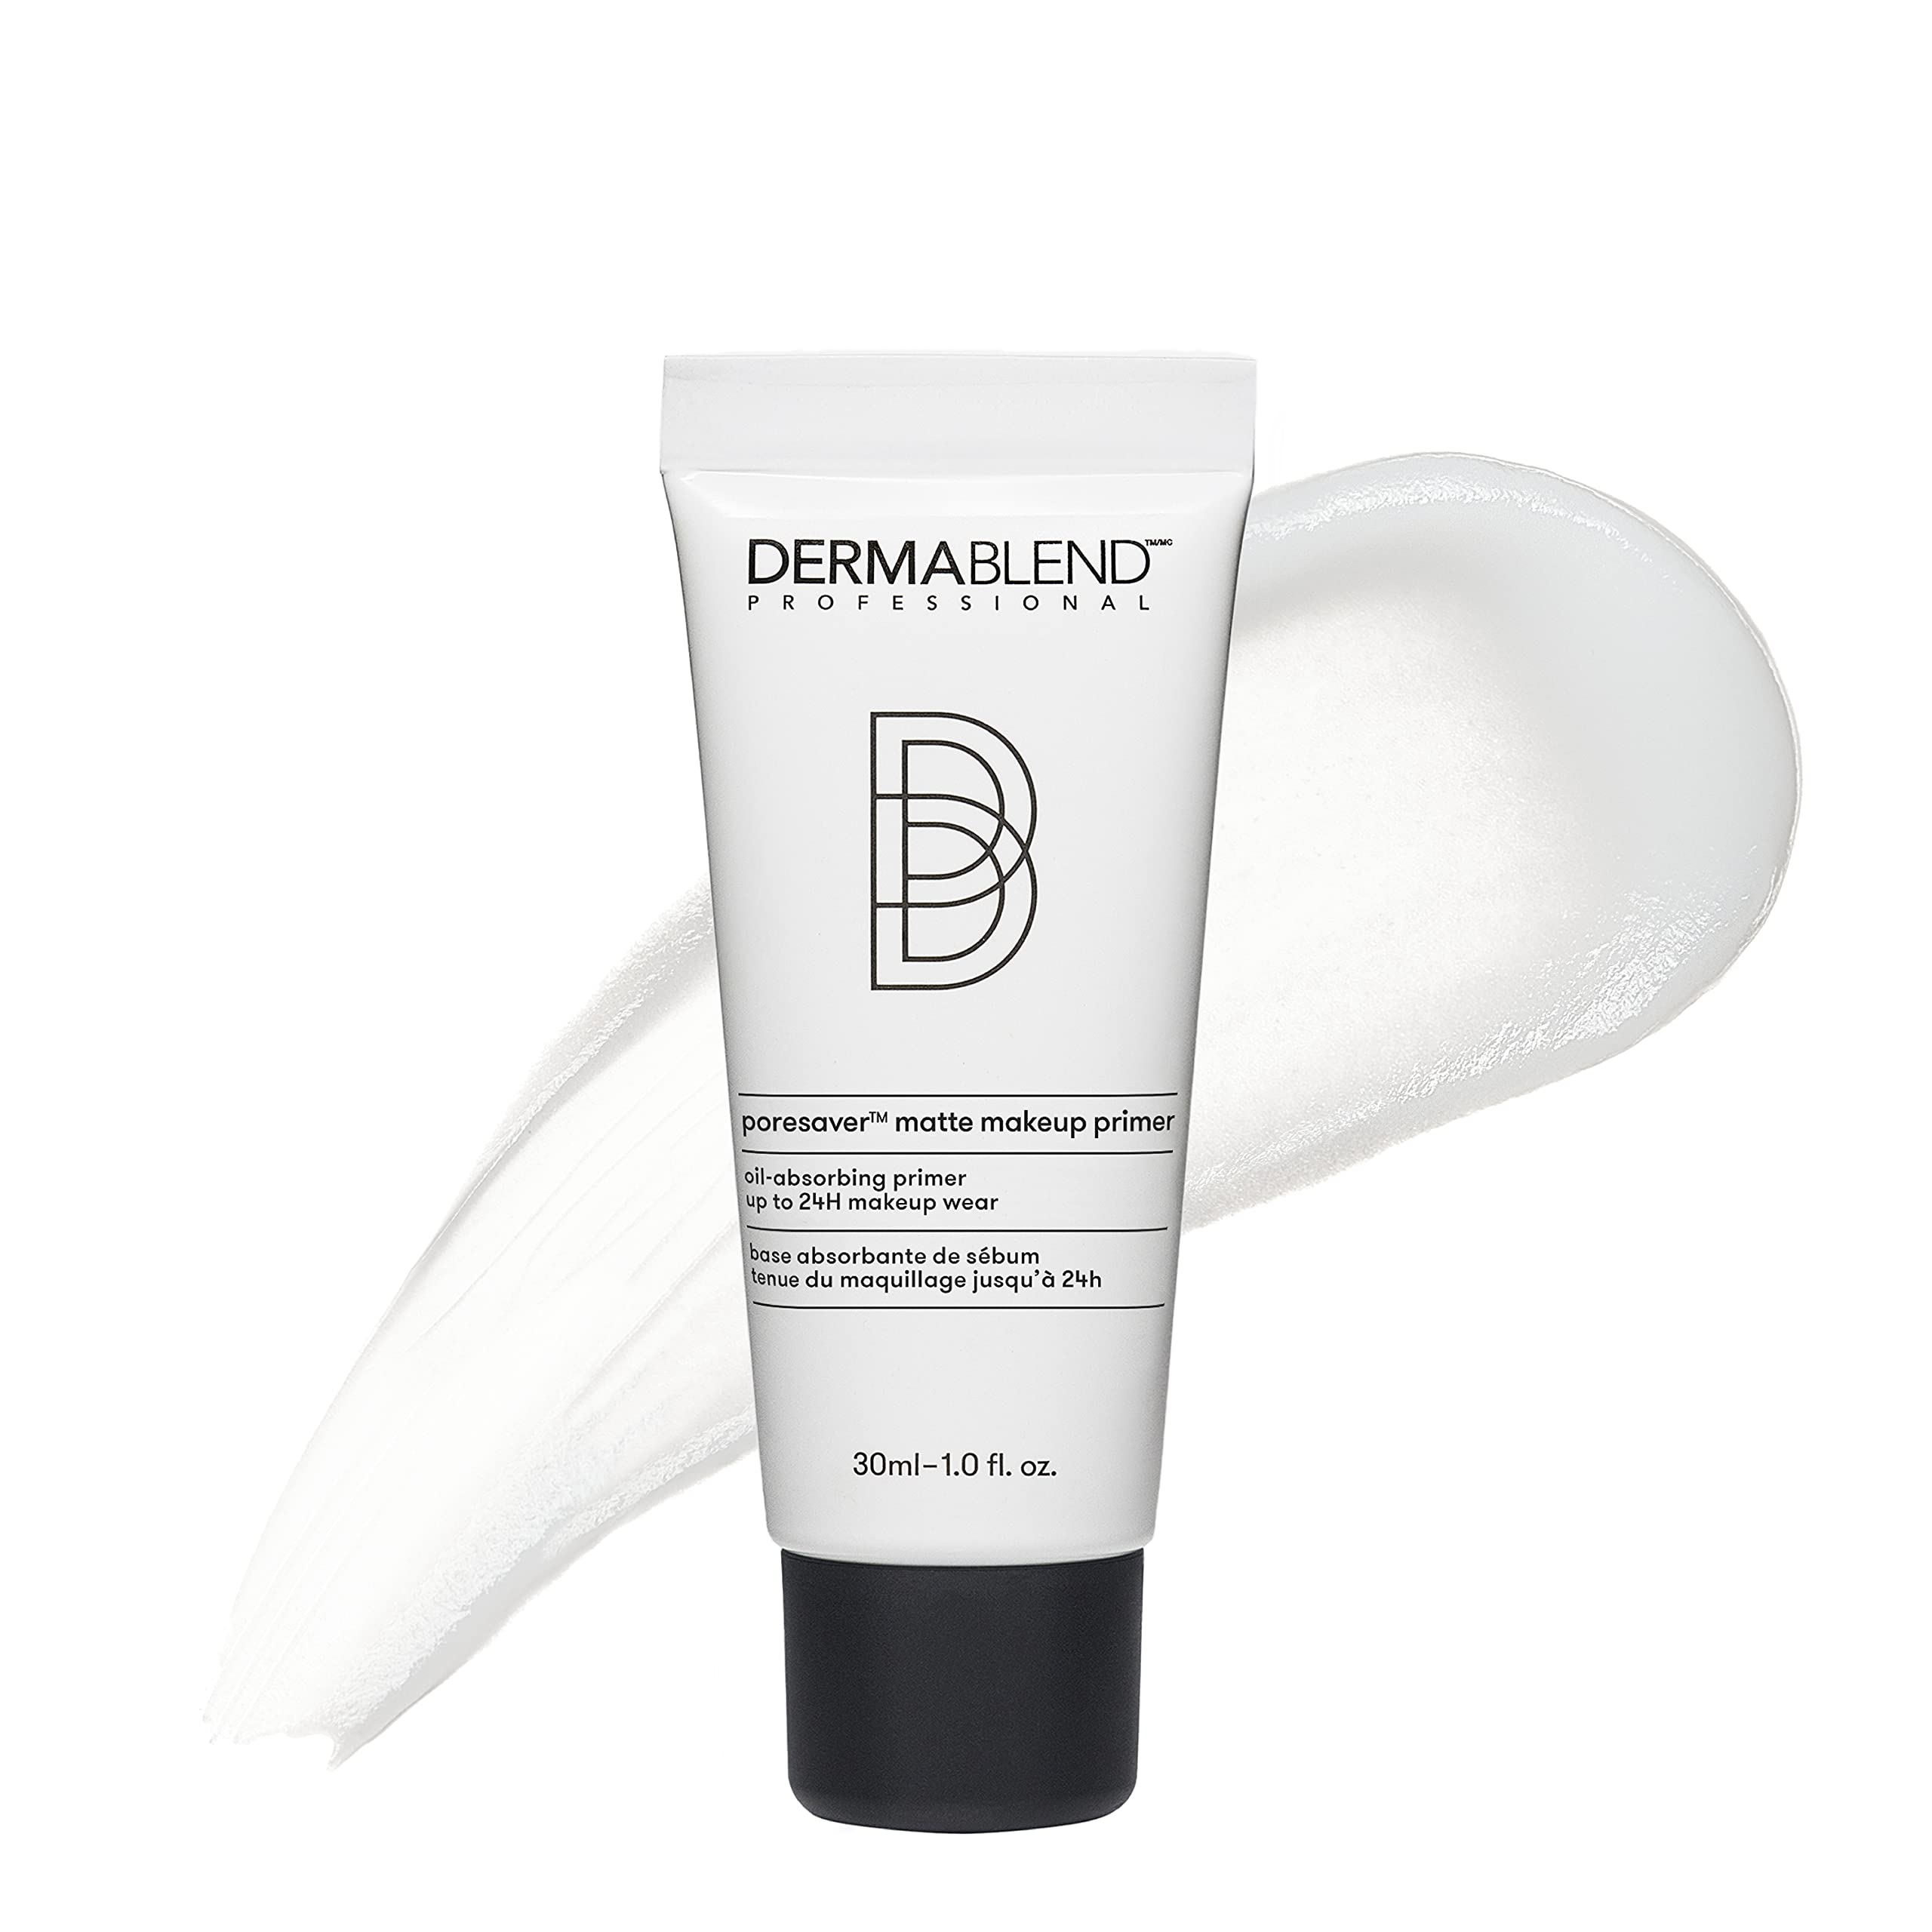 Dermablend Poresaver Matte Primer Face Makeup for Oily Skin, Lightweight Pore Minimizing & Blurring Face Primer, 24HR Wear, 1.0 